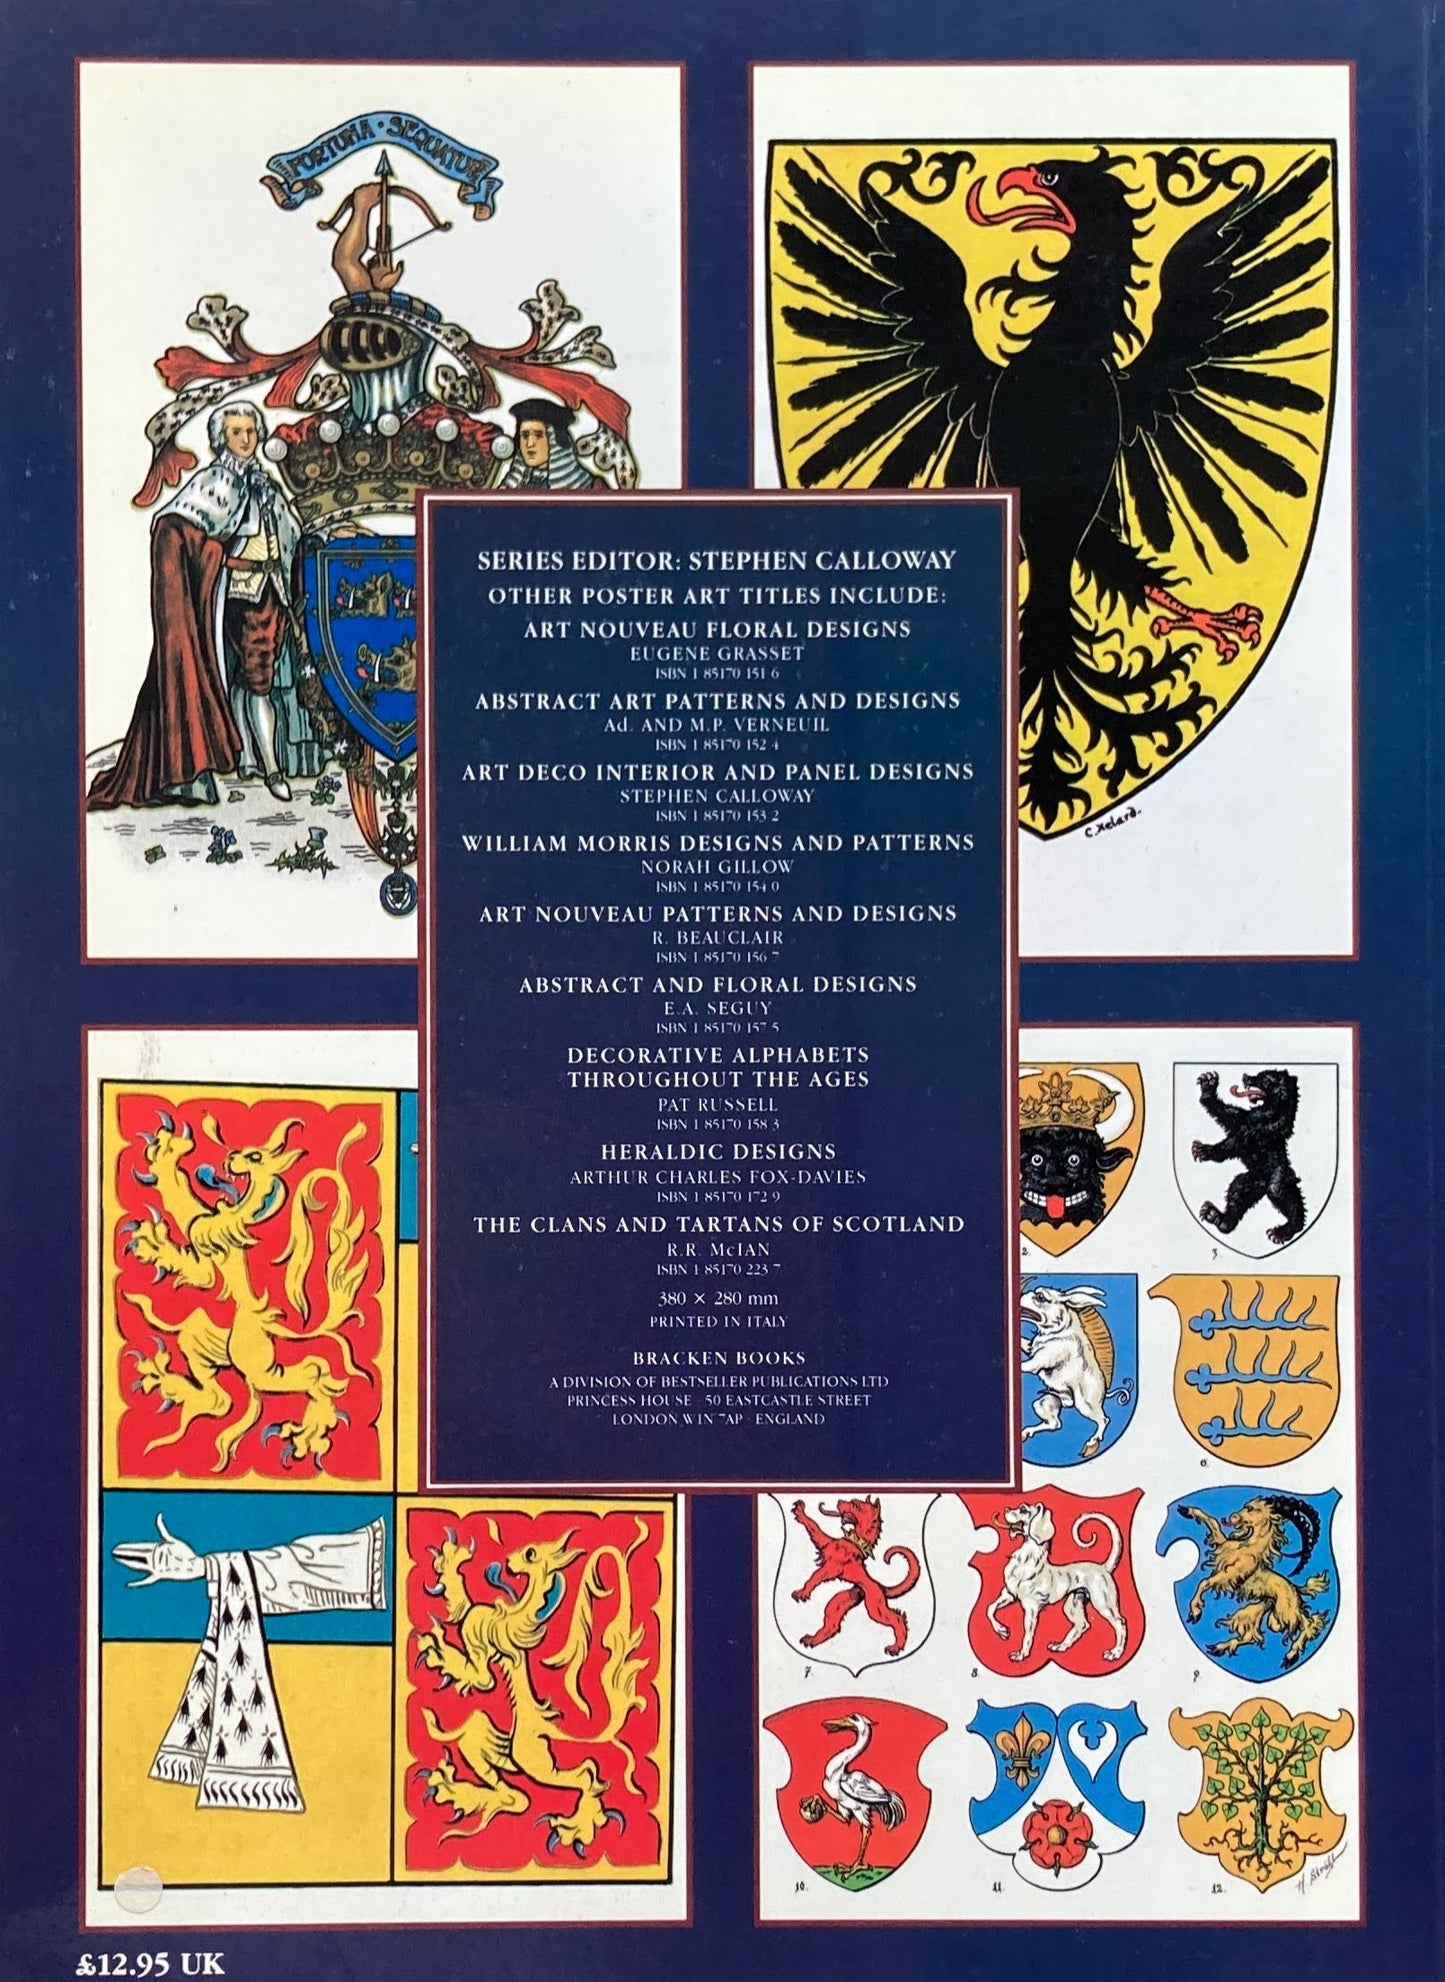 Heraldic Designs　Arthur Charles Fox-Davies　Poster Art Series